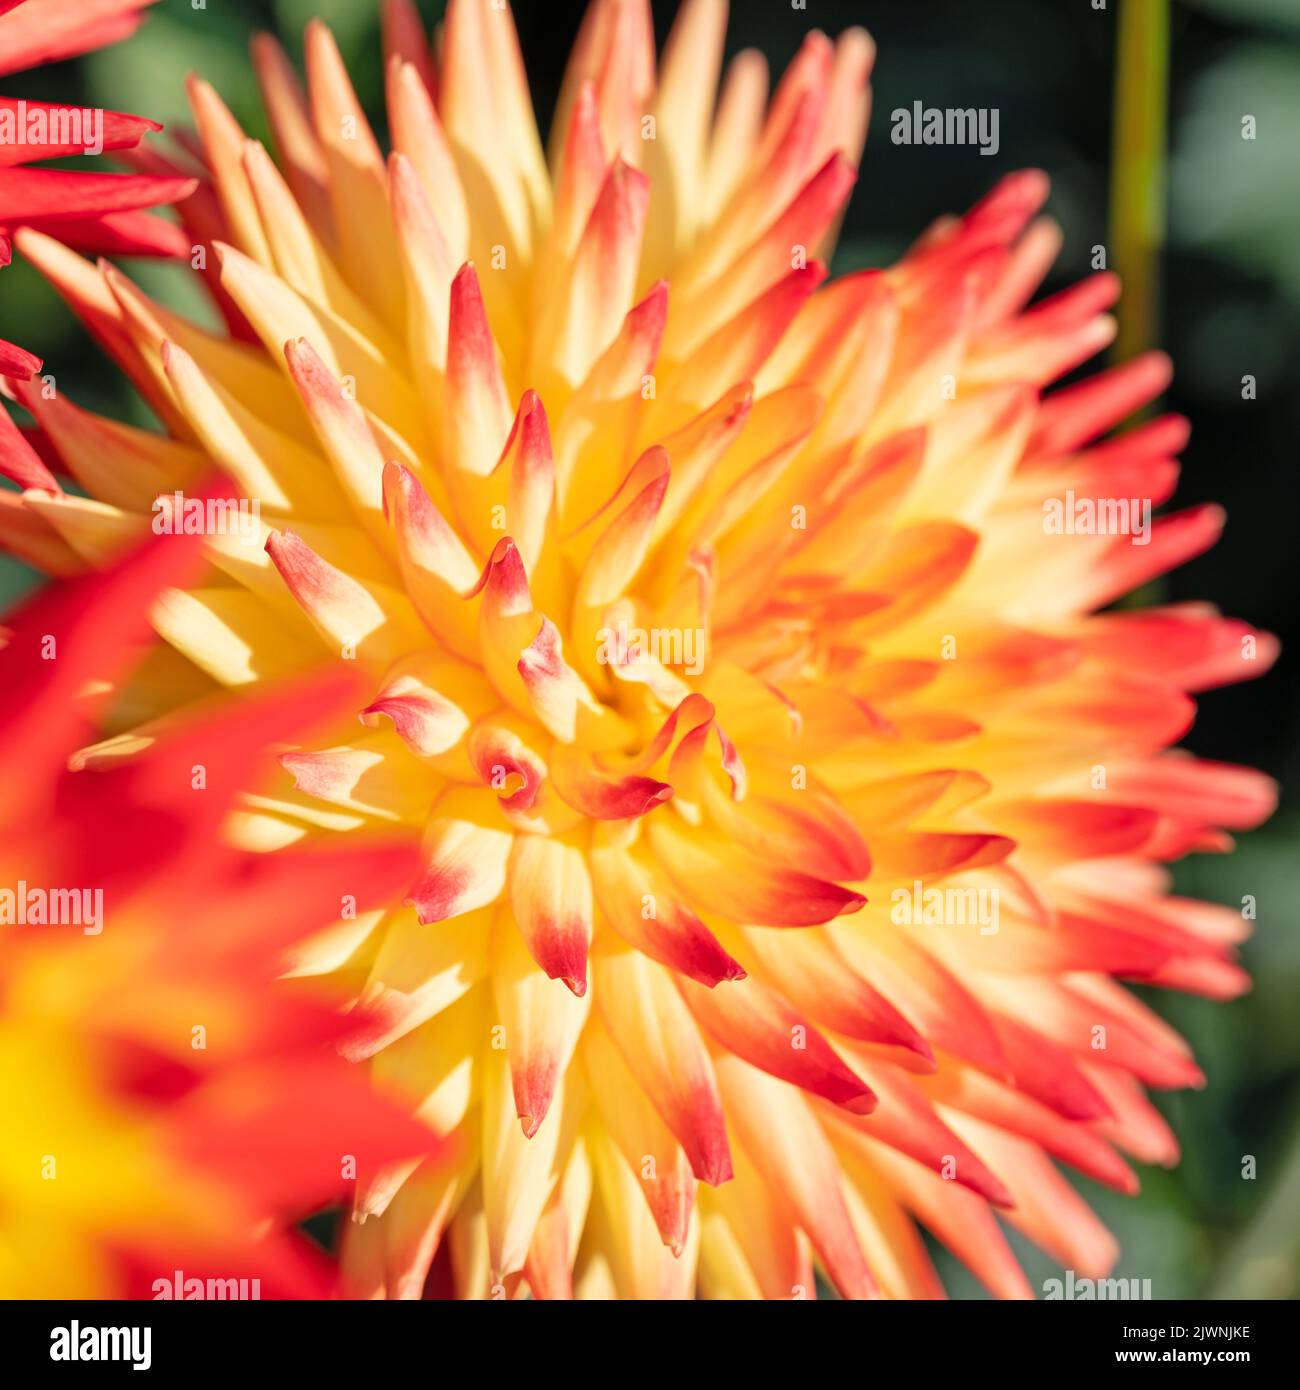 Dahlia flower in a closeup Stock Photo